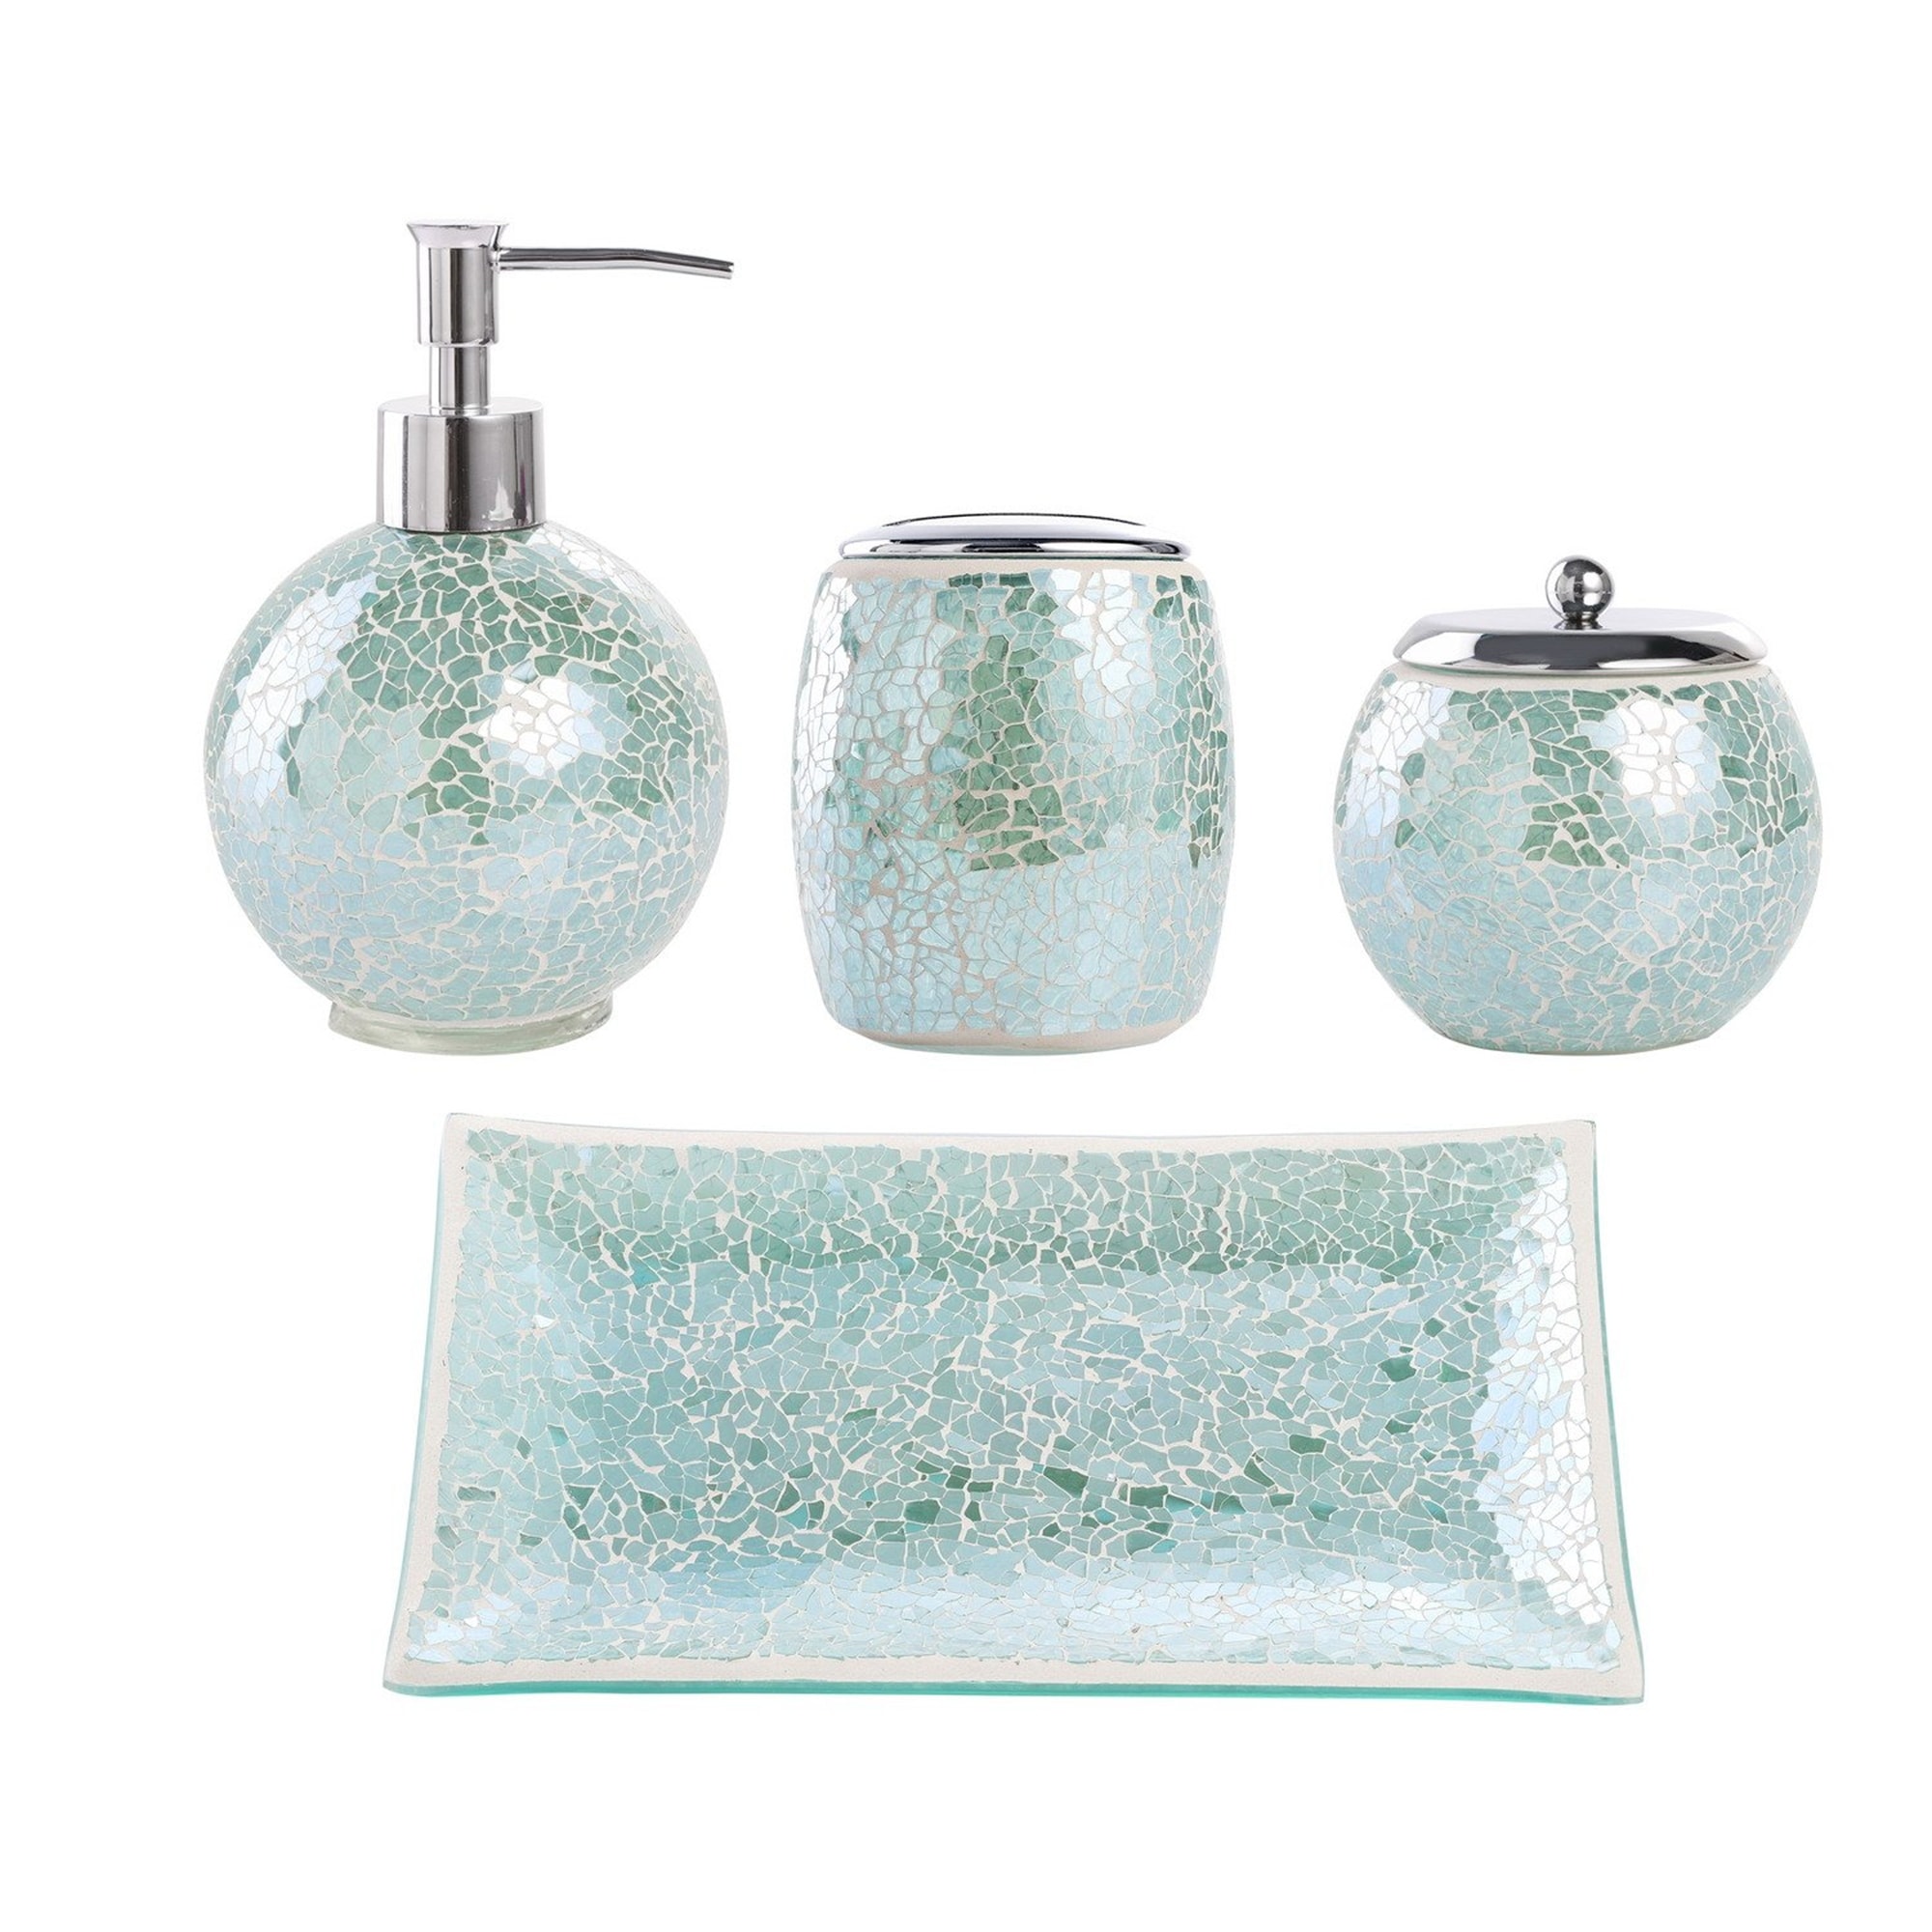 https://ak1.ostkcdn.com/images/products/is/images/direct/cd8957936862d9ae2bf4db056dd67befdeaf370e/Decorative-Glass-Bathroom-Soap-Dispenser-Set.jpg